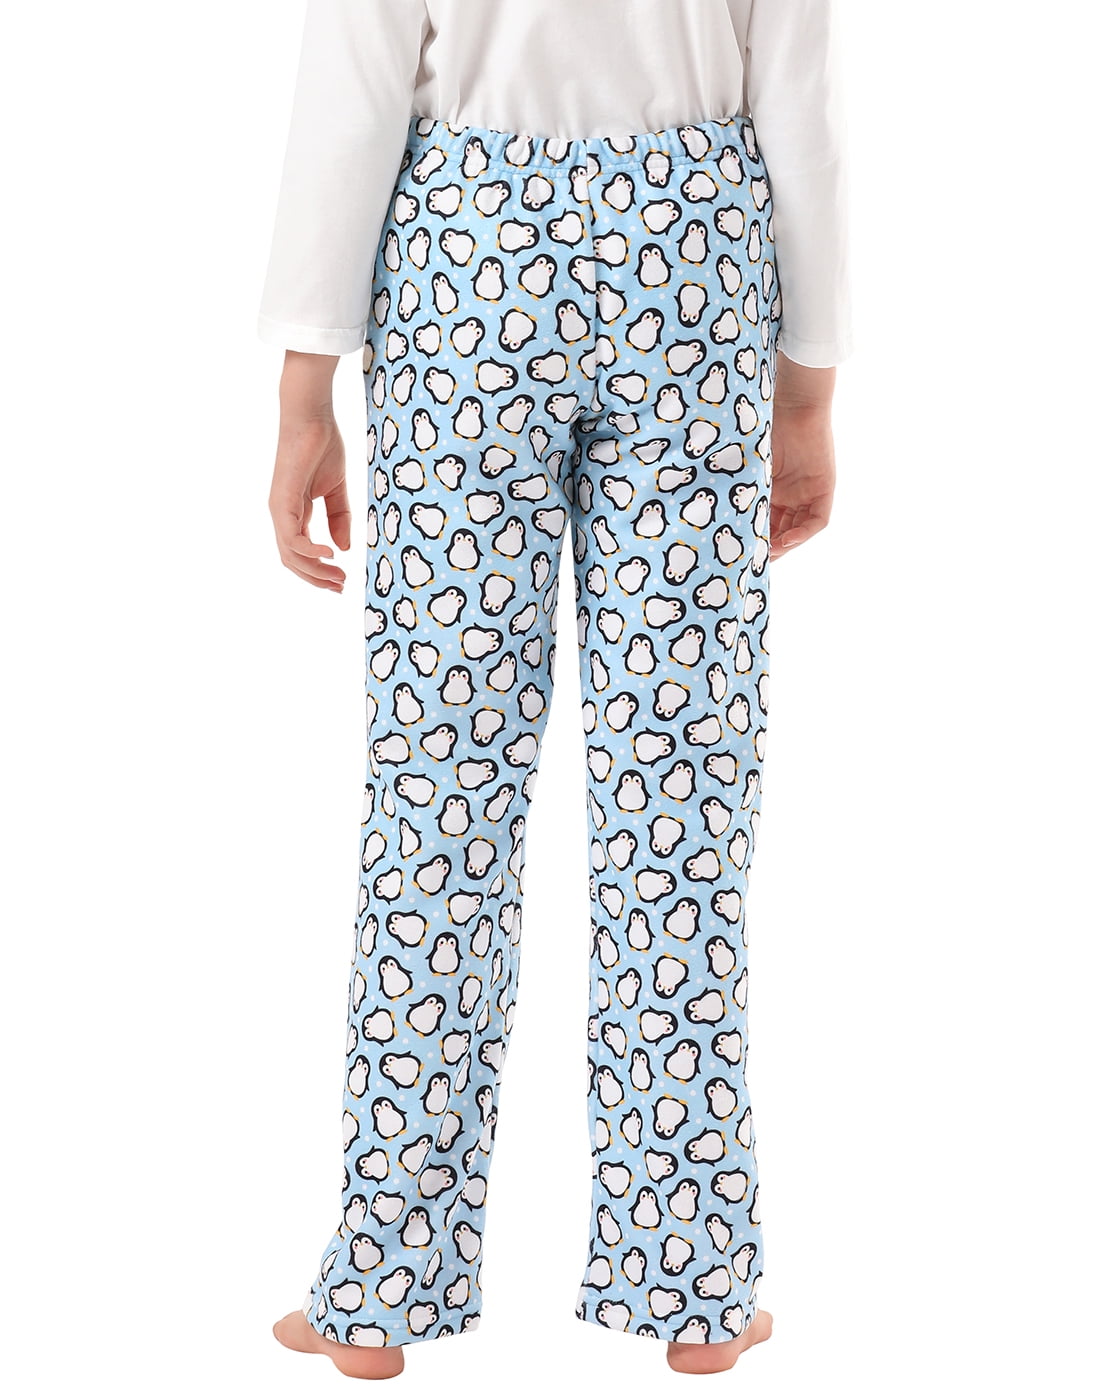 HDE Girl's Fleece Pajama Pants Kids Sleepwear Fuzzy Plush PJ Bottoms w/  Pockets Buffalo Plaid - 6-6X